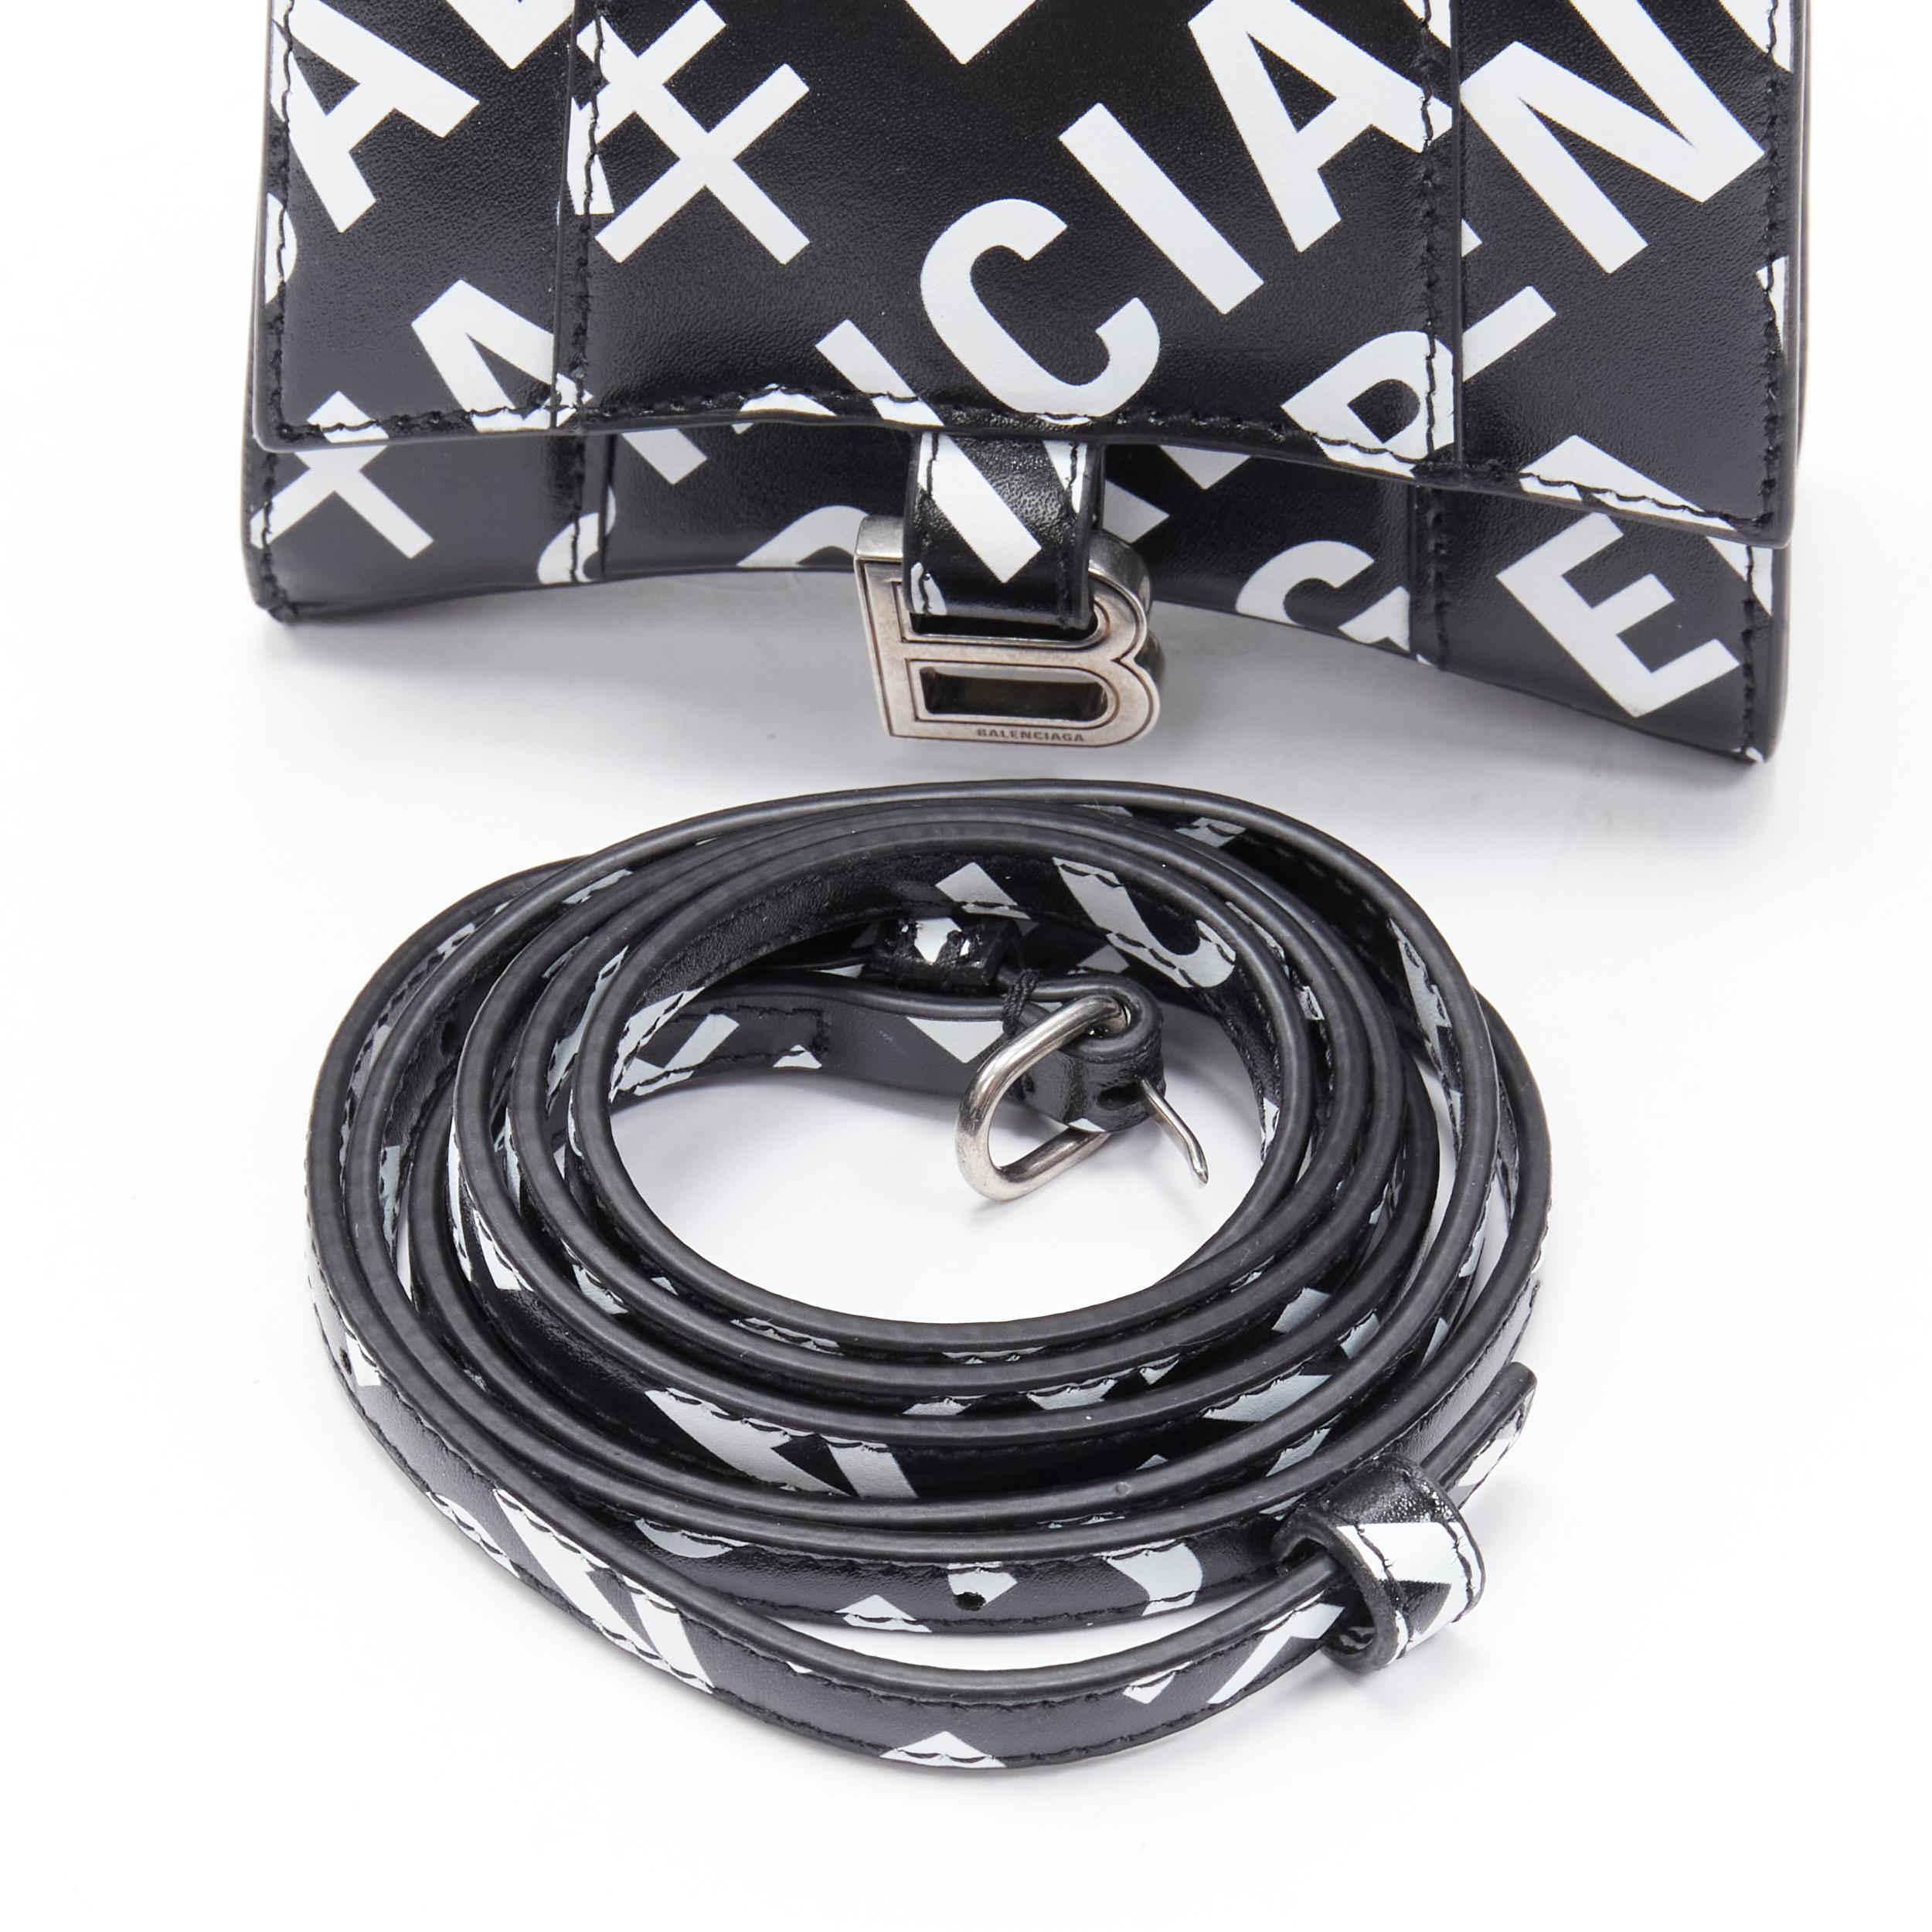 new BALENCIAGA Hourglass Nano black white logo leather crossbody bag Limited 1